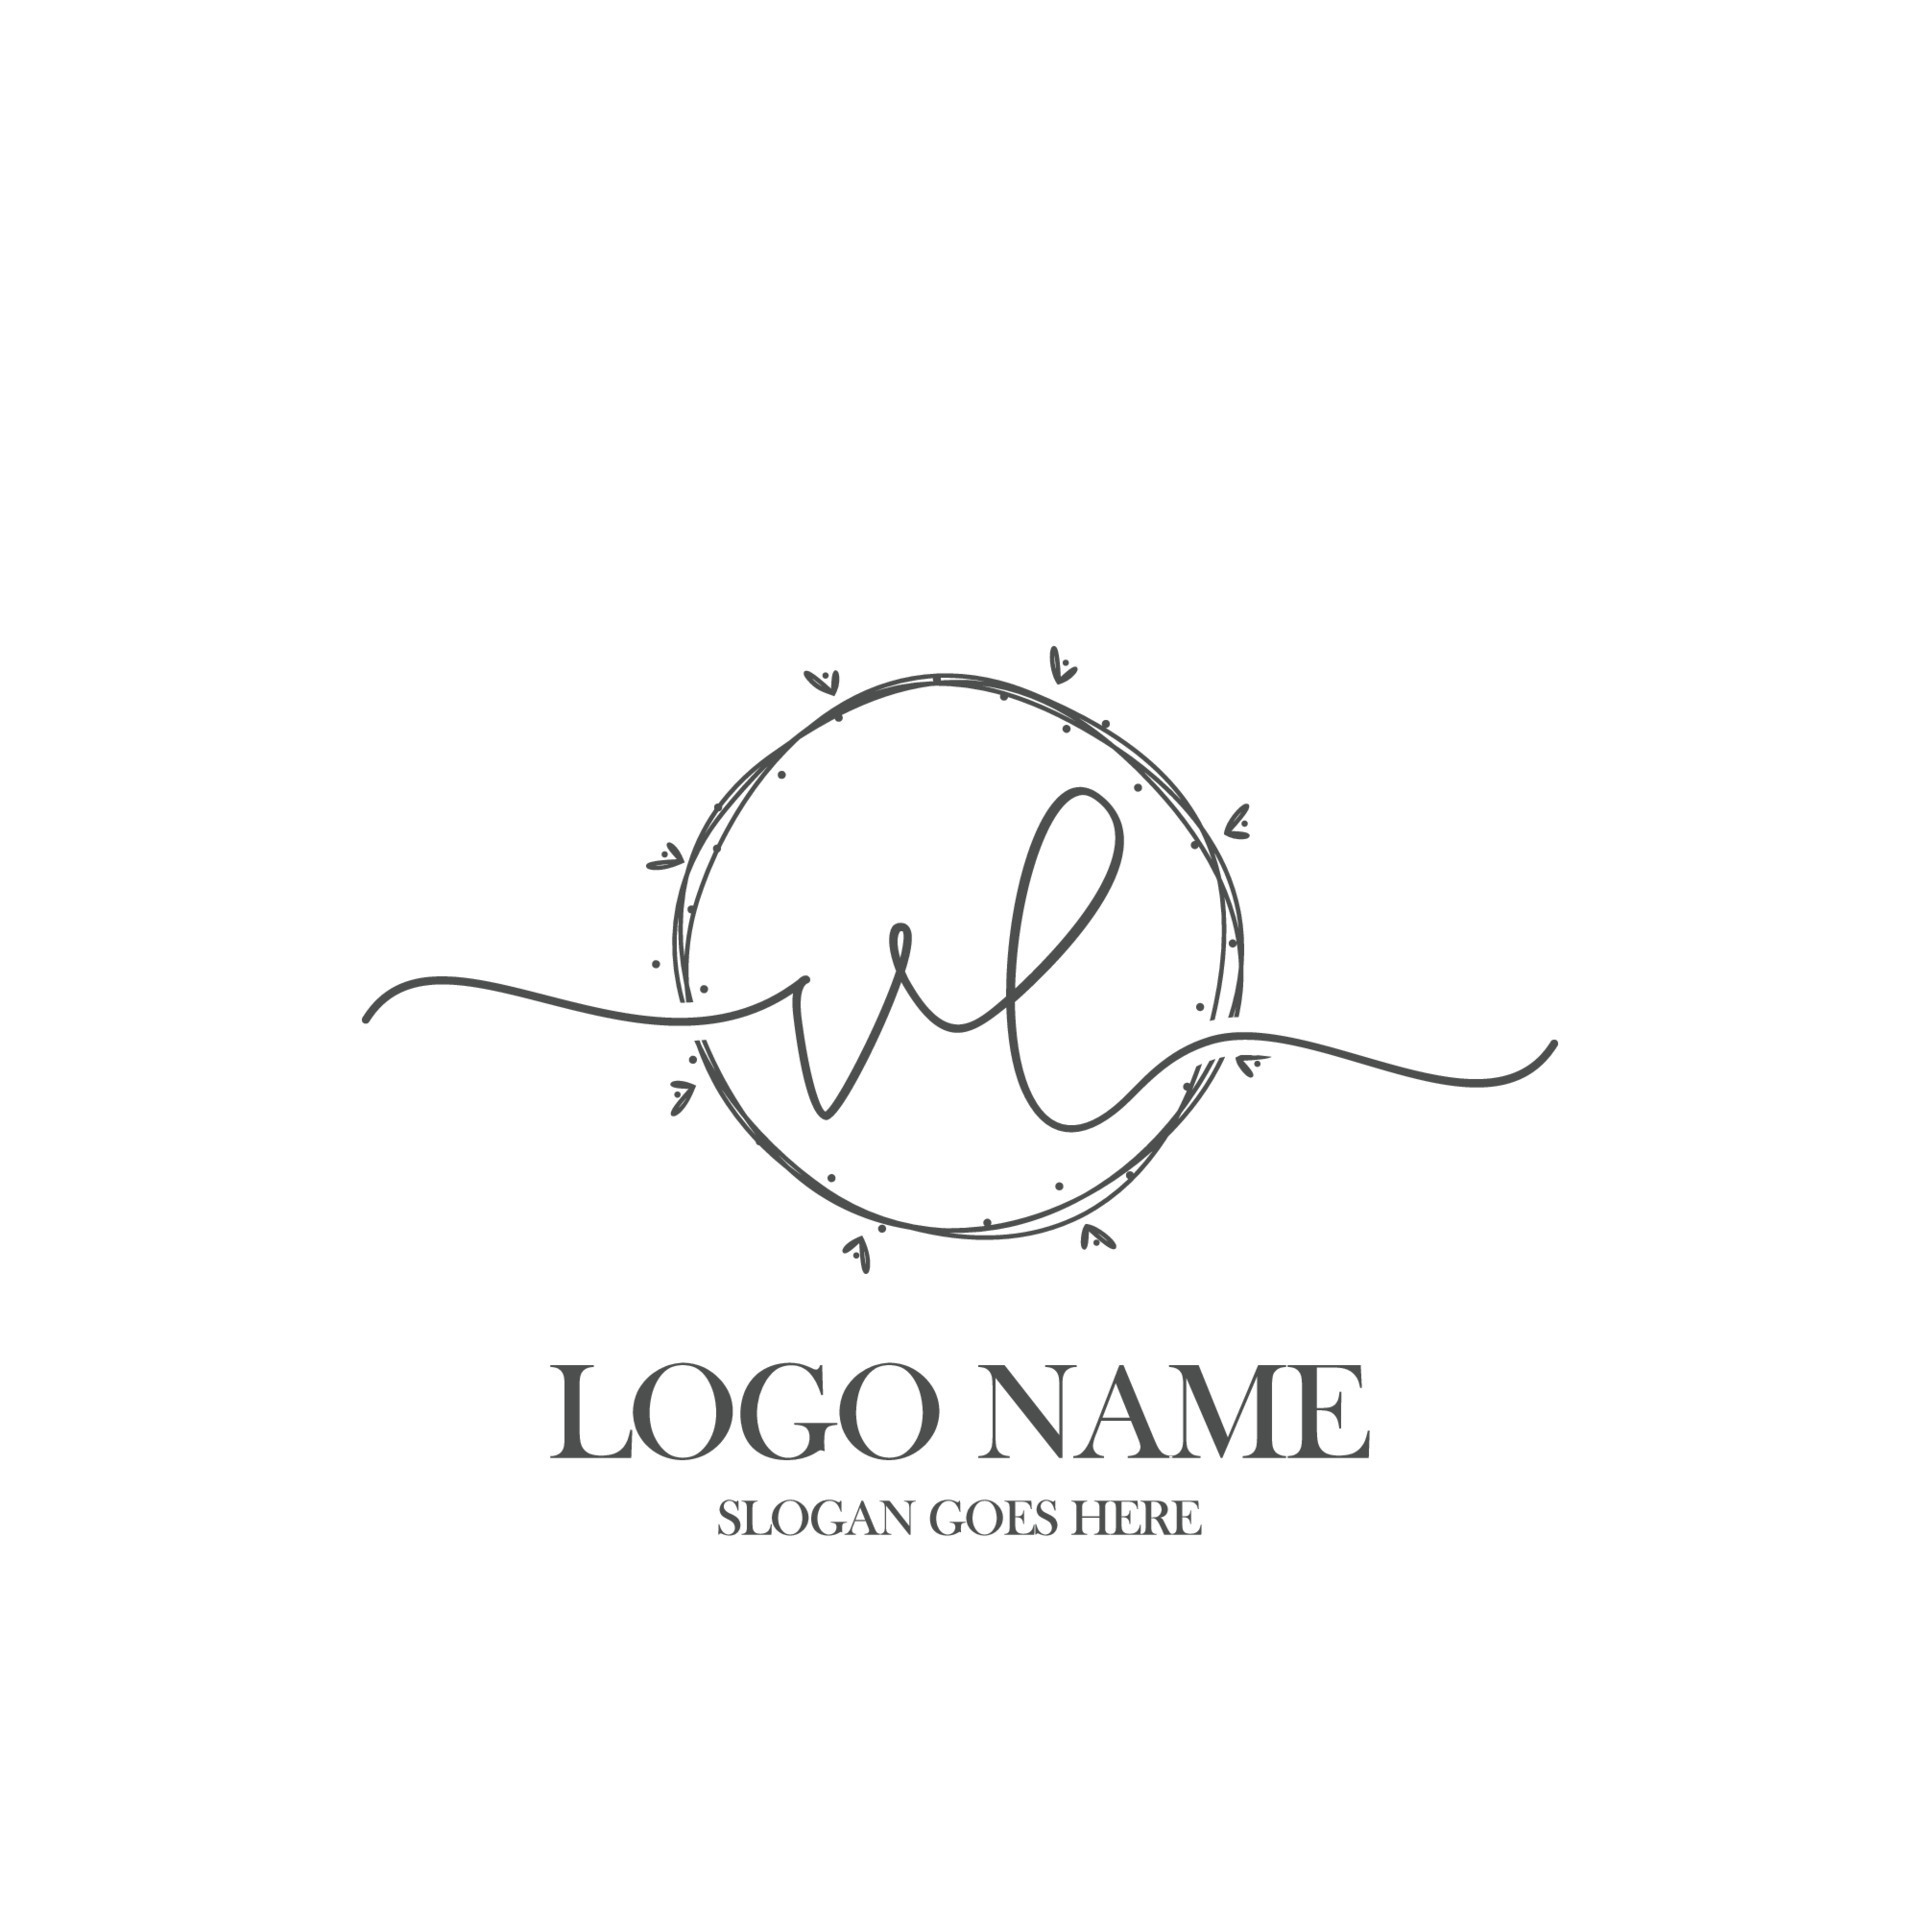 Initial vl beauty monogram and elegant logo design